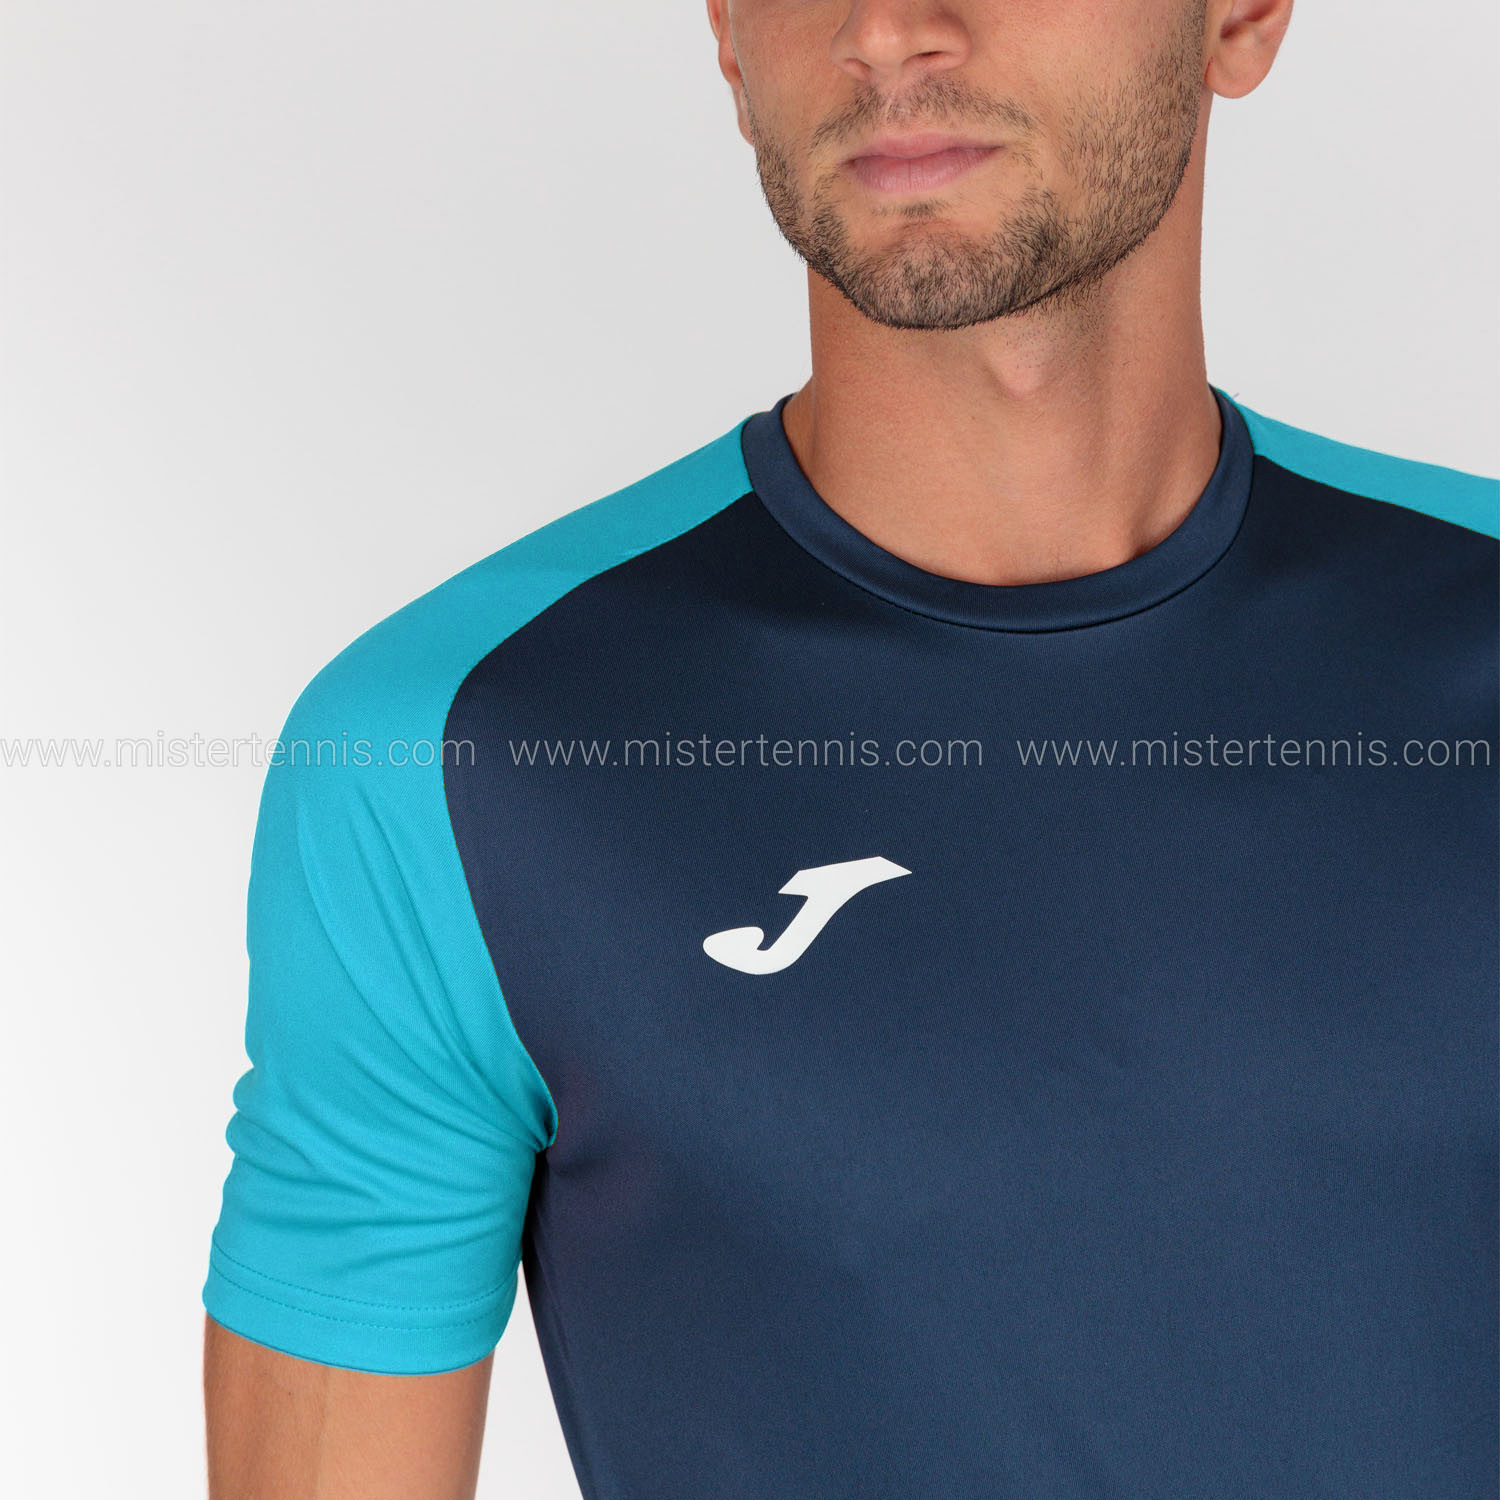 Joma Academy IV T-Shirt - Navy/Fluor Turquoise